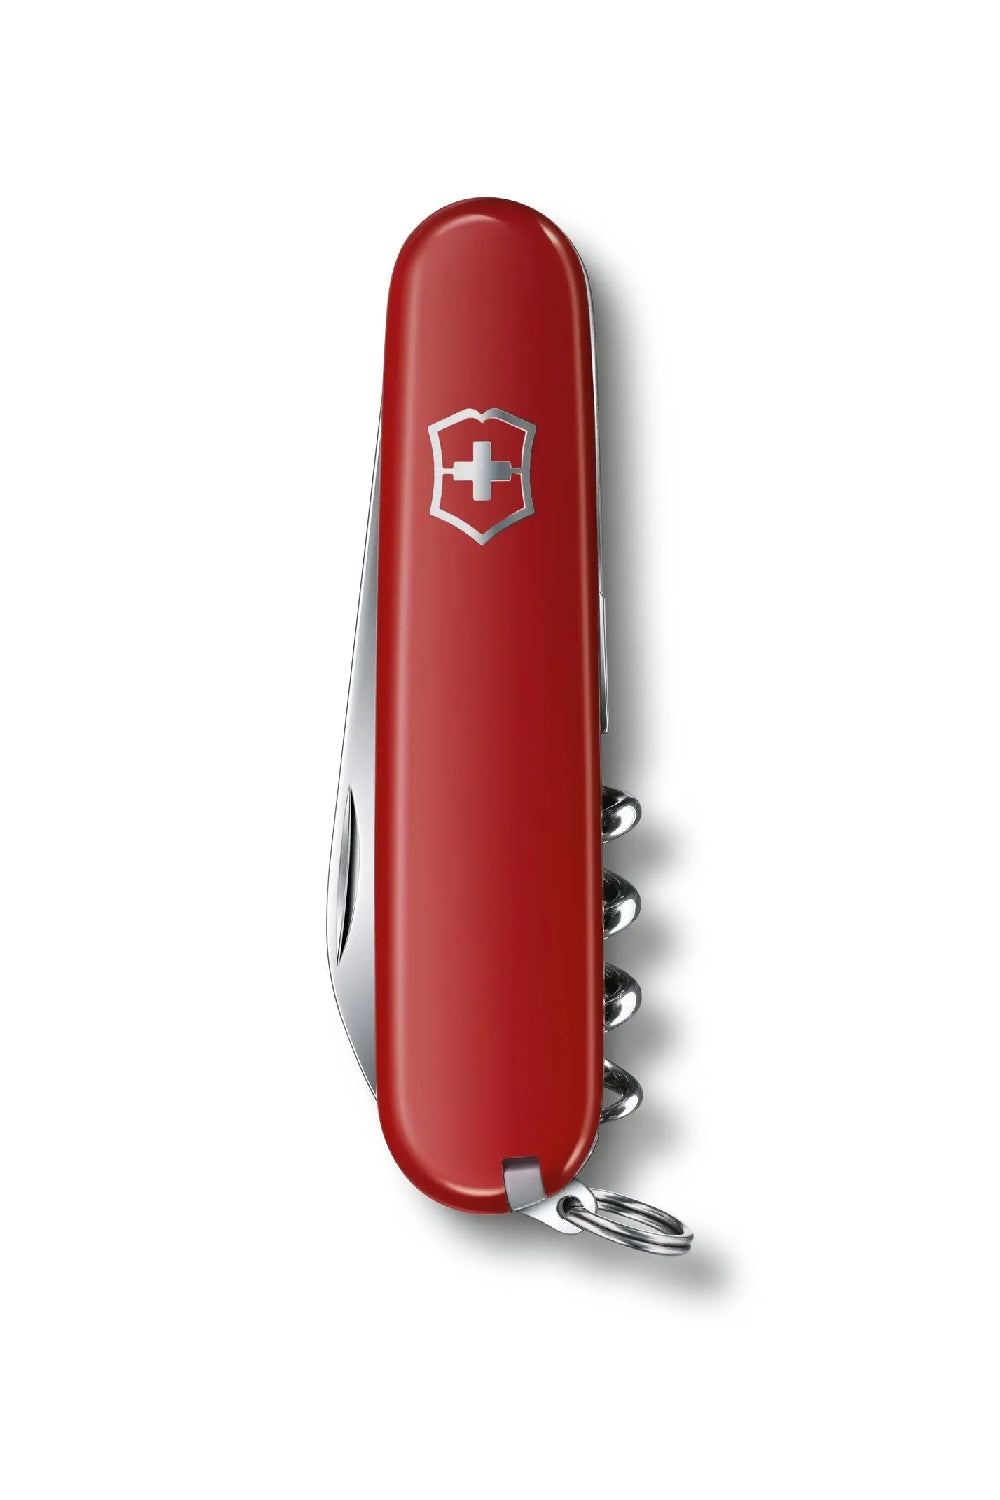 Victorinox Waiter Swiss Army Medium Pocket Knife in Red